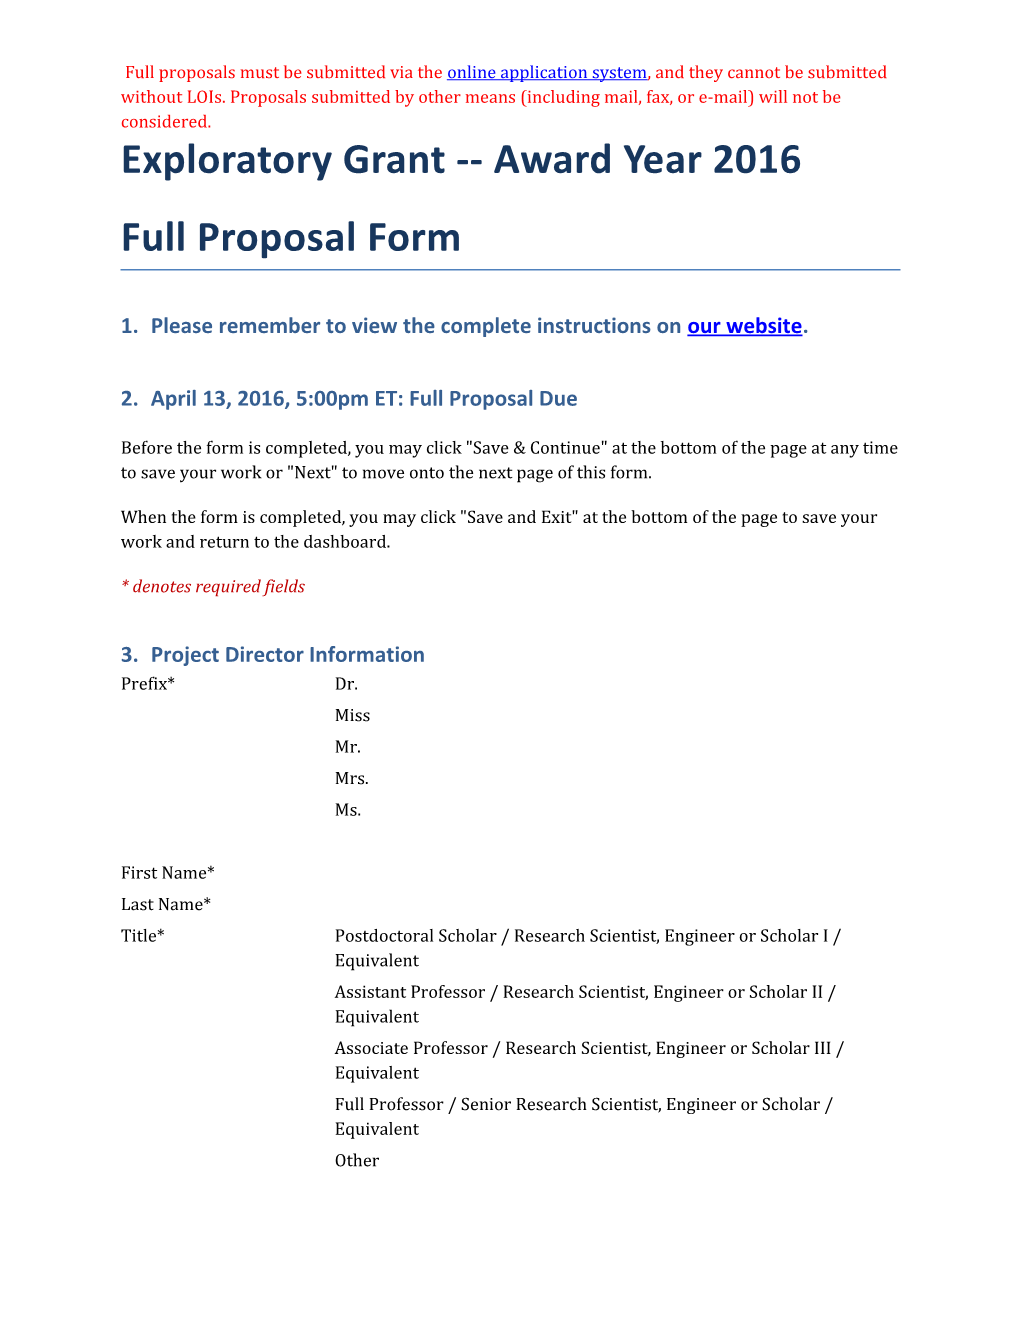 Exploratory Grant Award Year 2016 Full Proposal Form